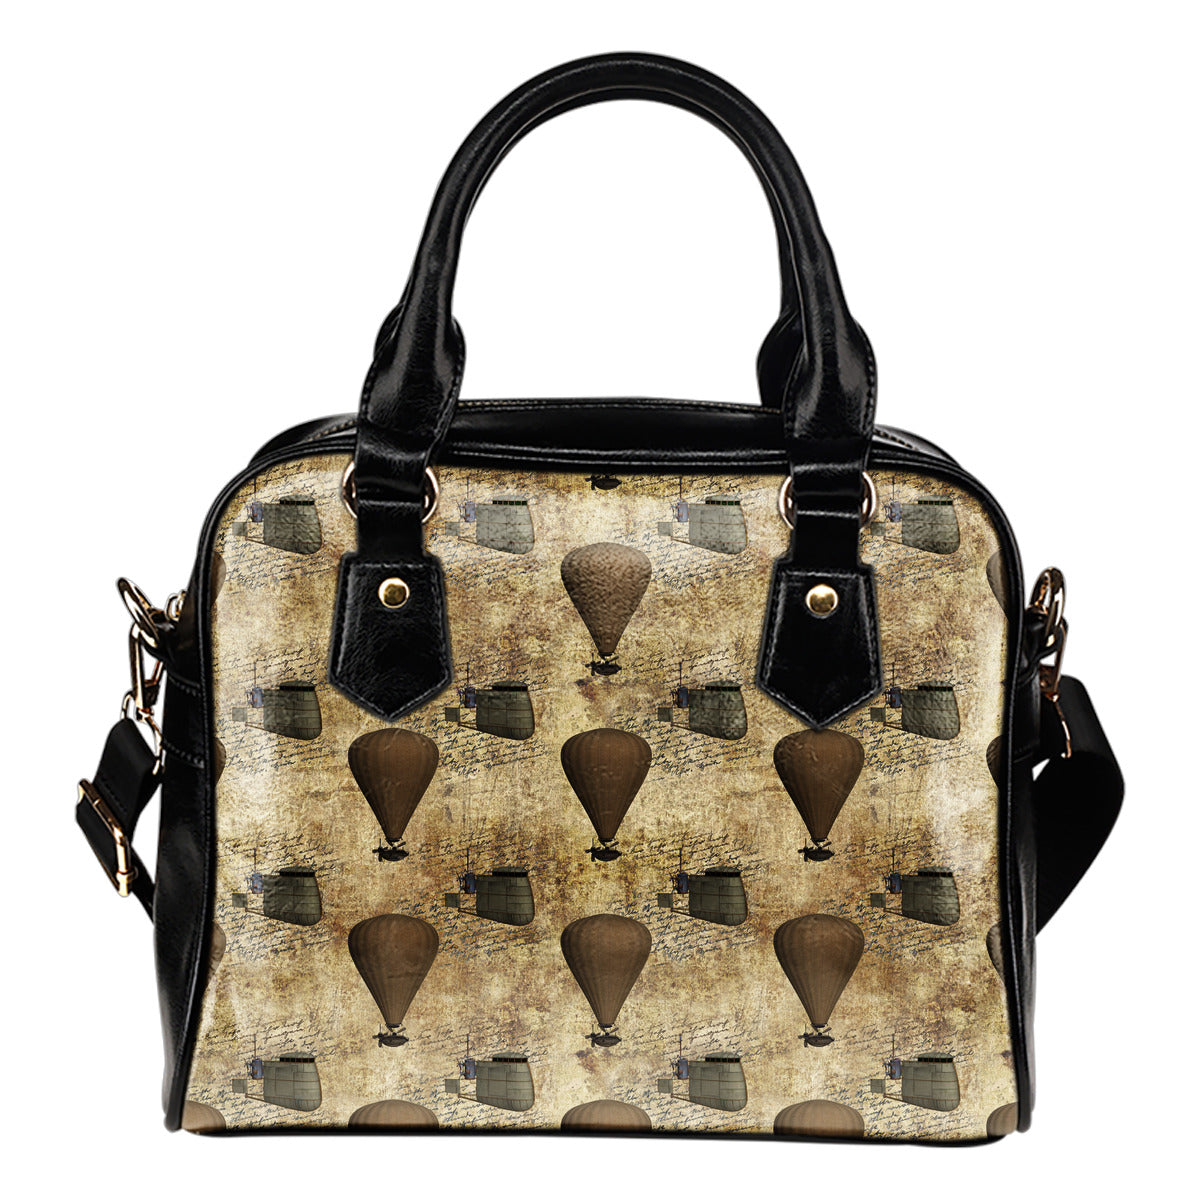 Steampunk Themed Design B4 Women Fashion Shoulder Handbag Black Vegan Faux Leather